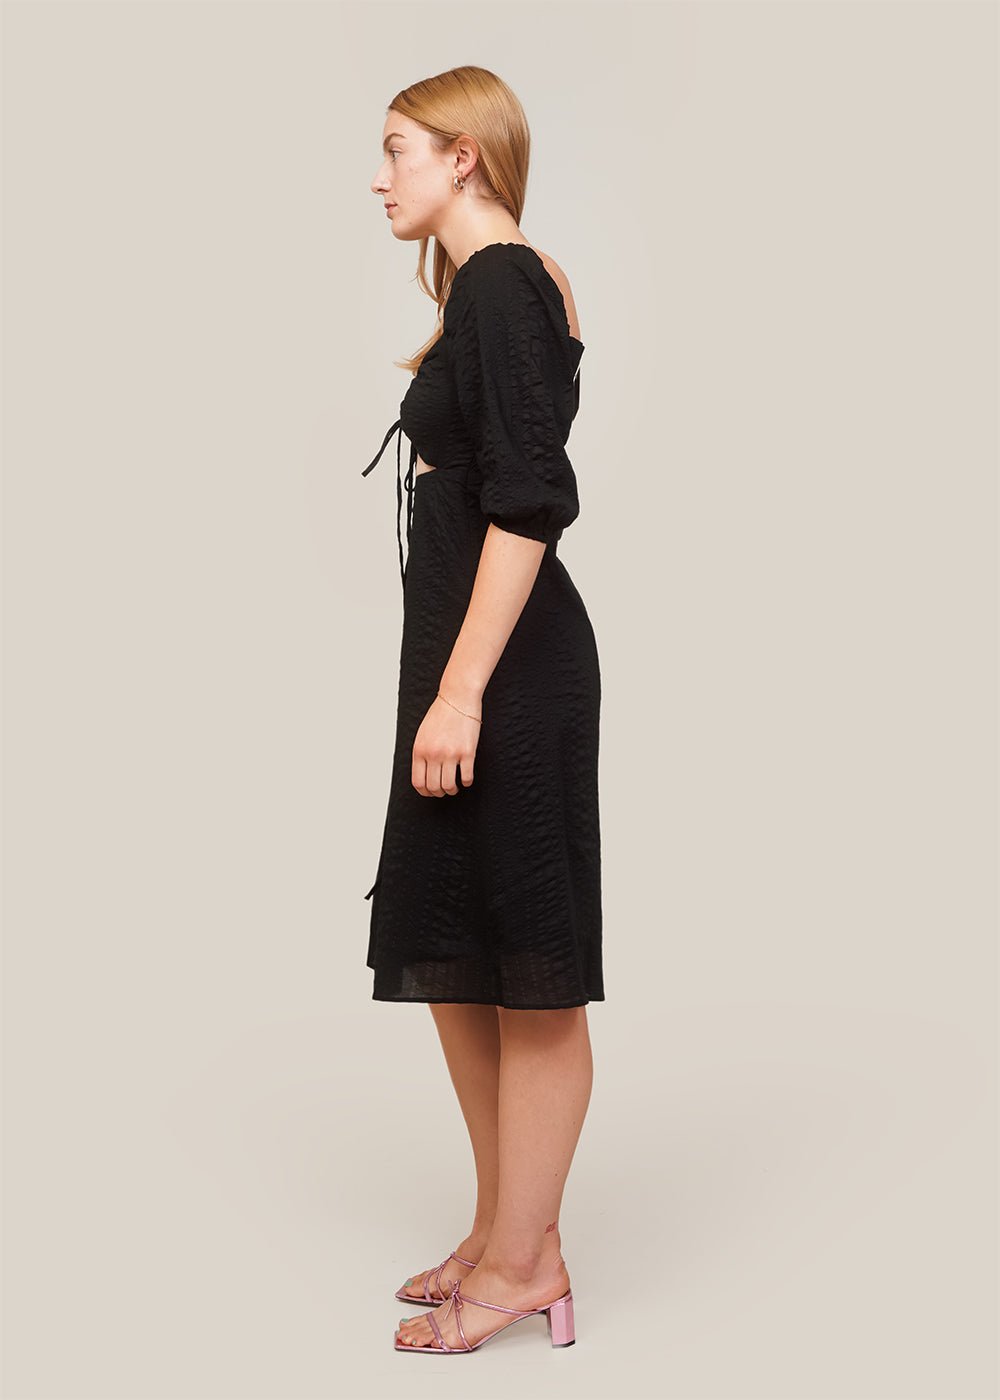 WRAY Black Jules Midi Dress - New Classics Studios Sustainable Ethical Fashion Canada